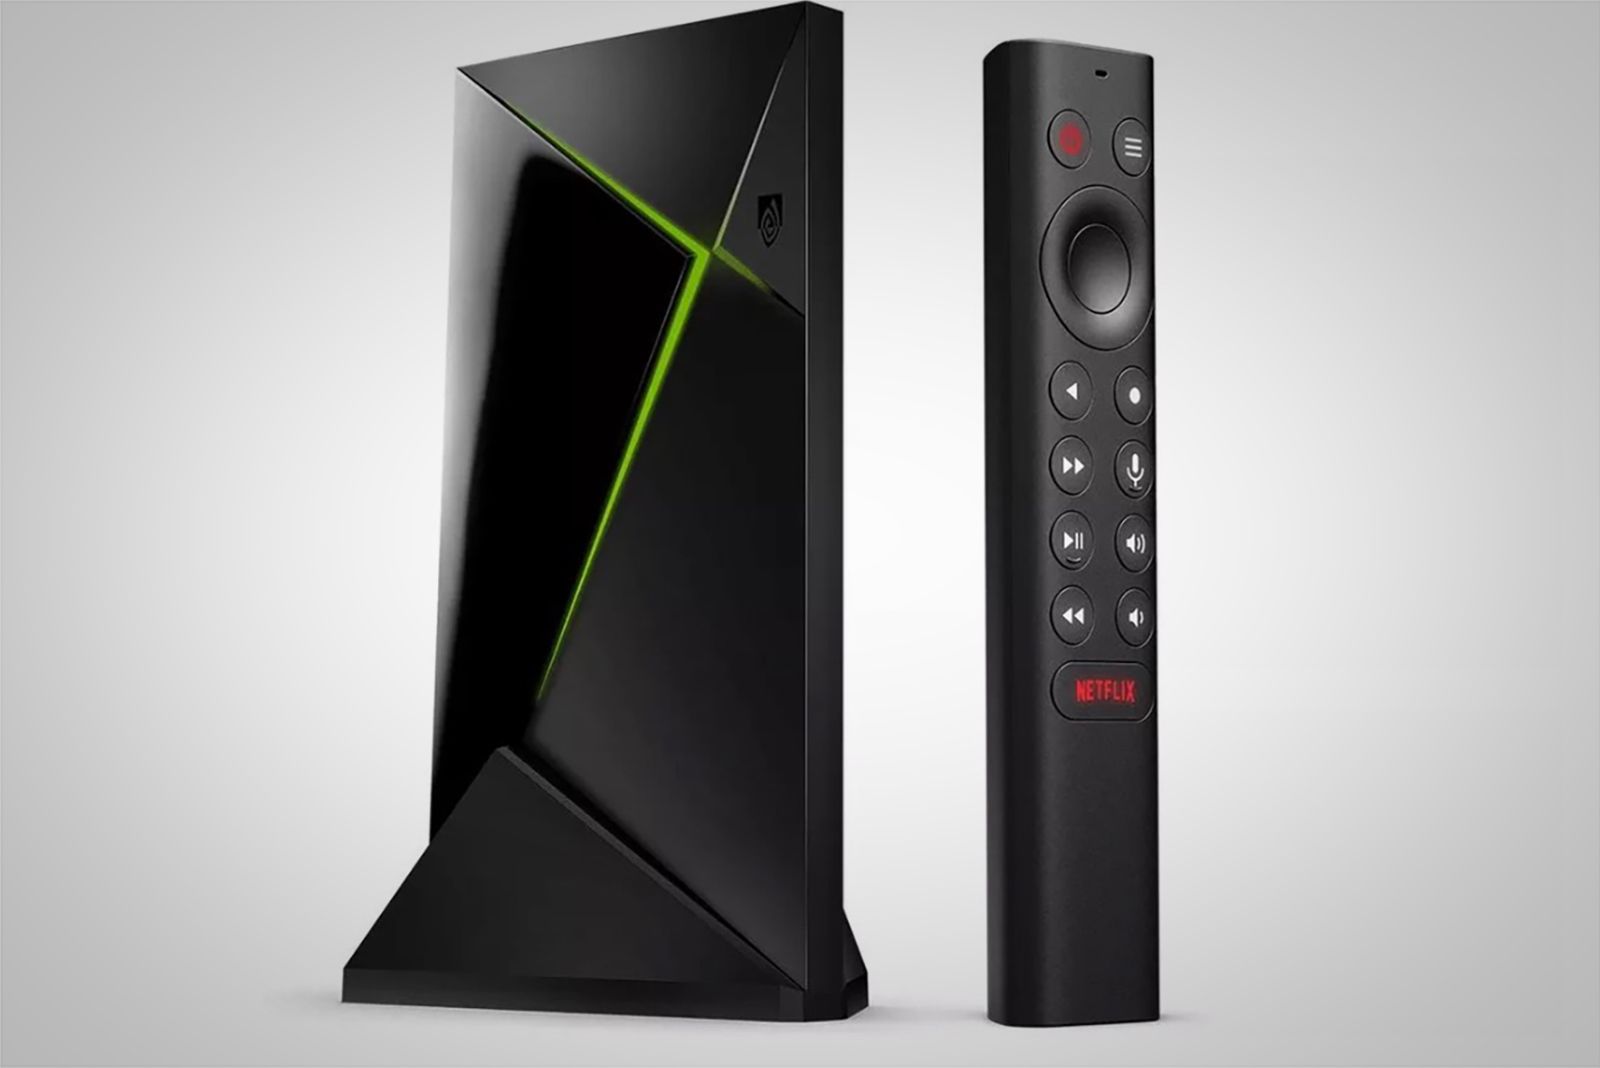 Nividias new Shield TV devices leak out on both Amazon and Newegg image 1